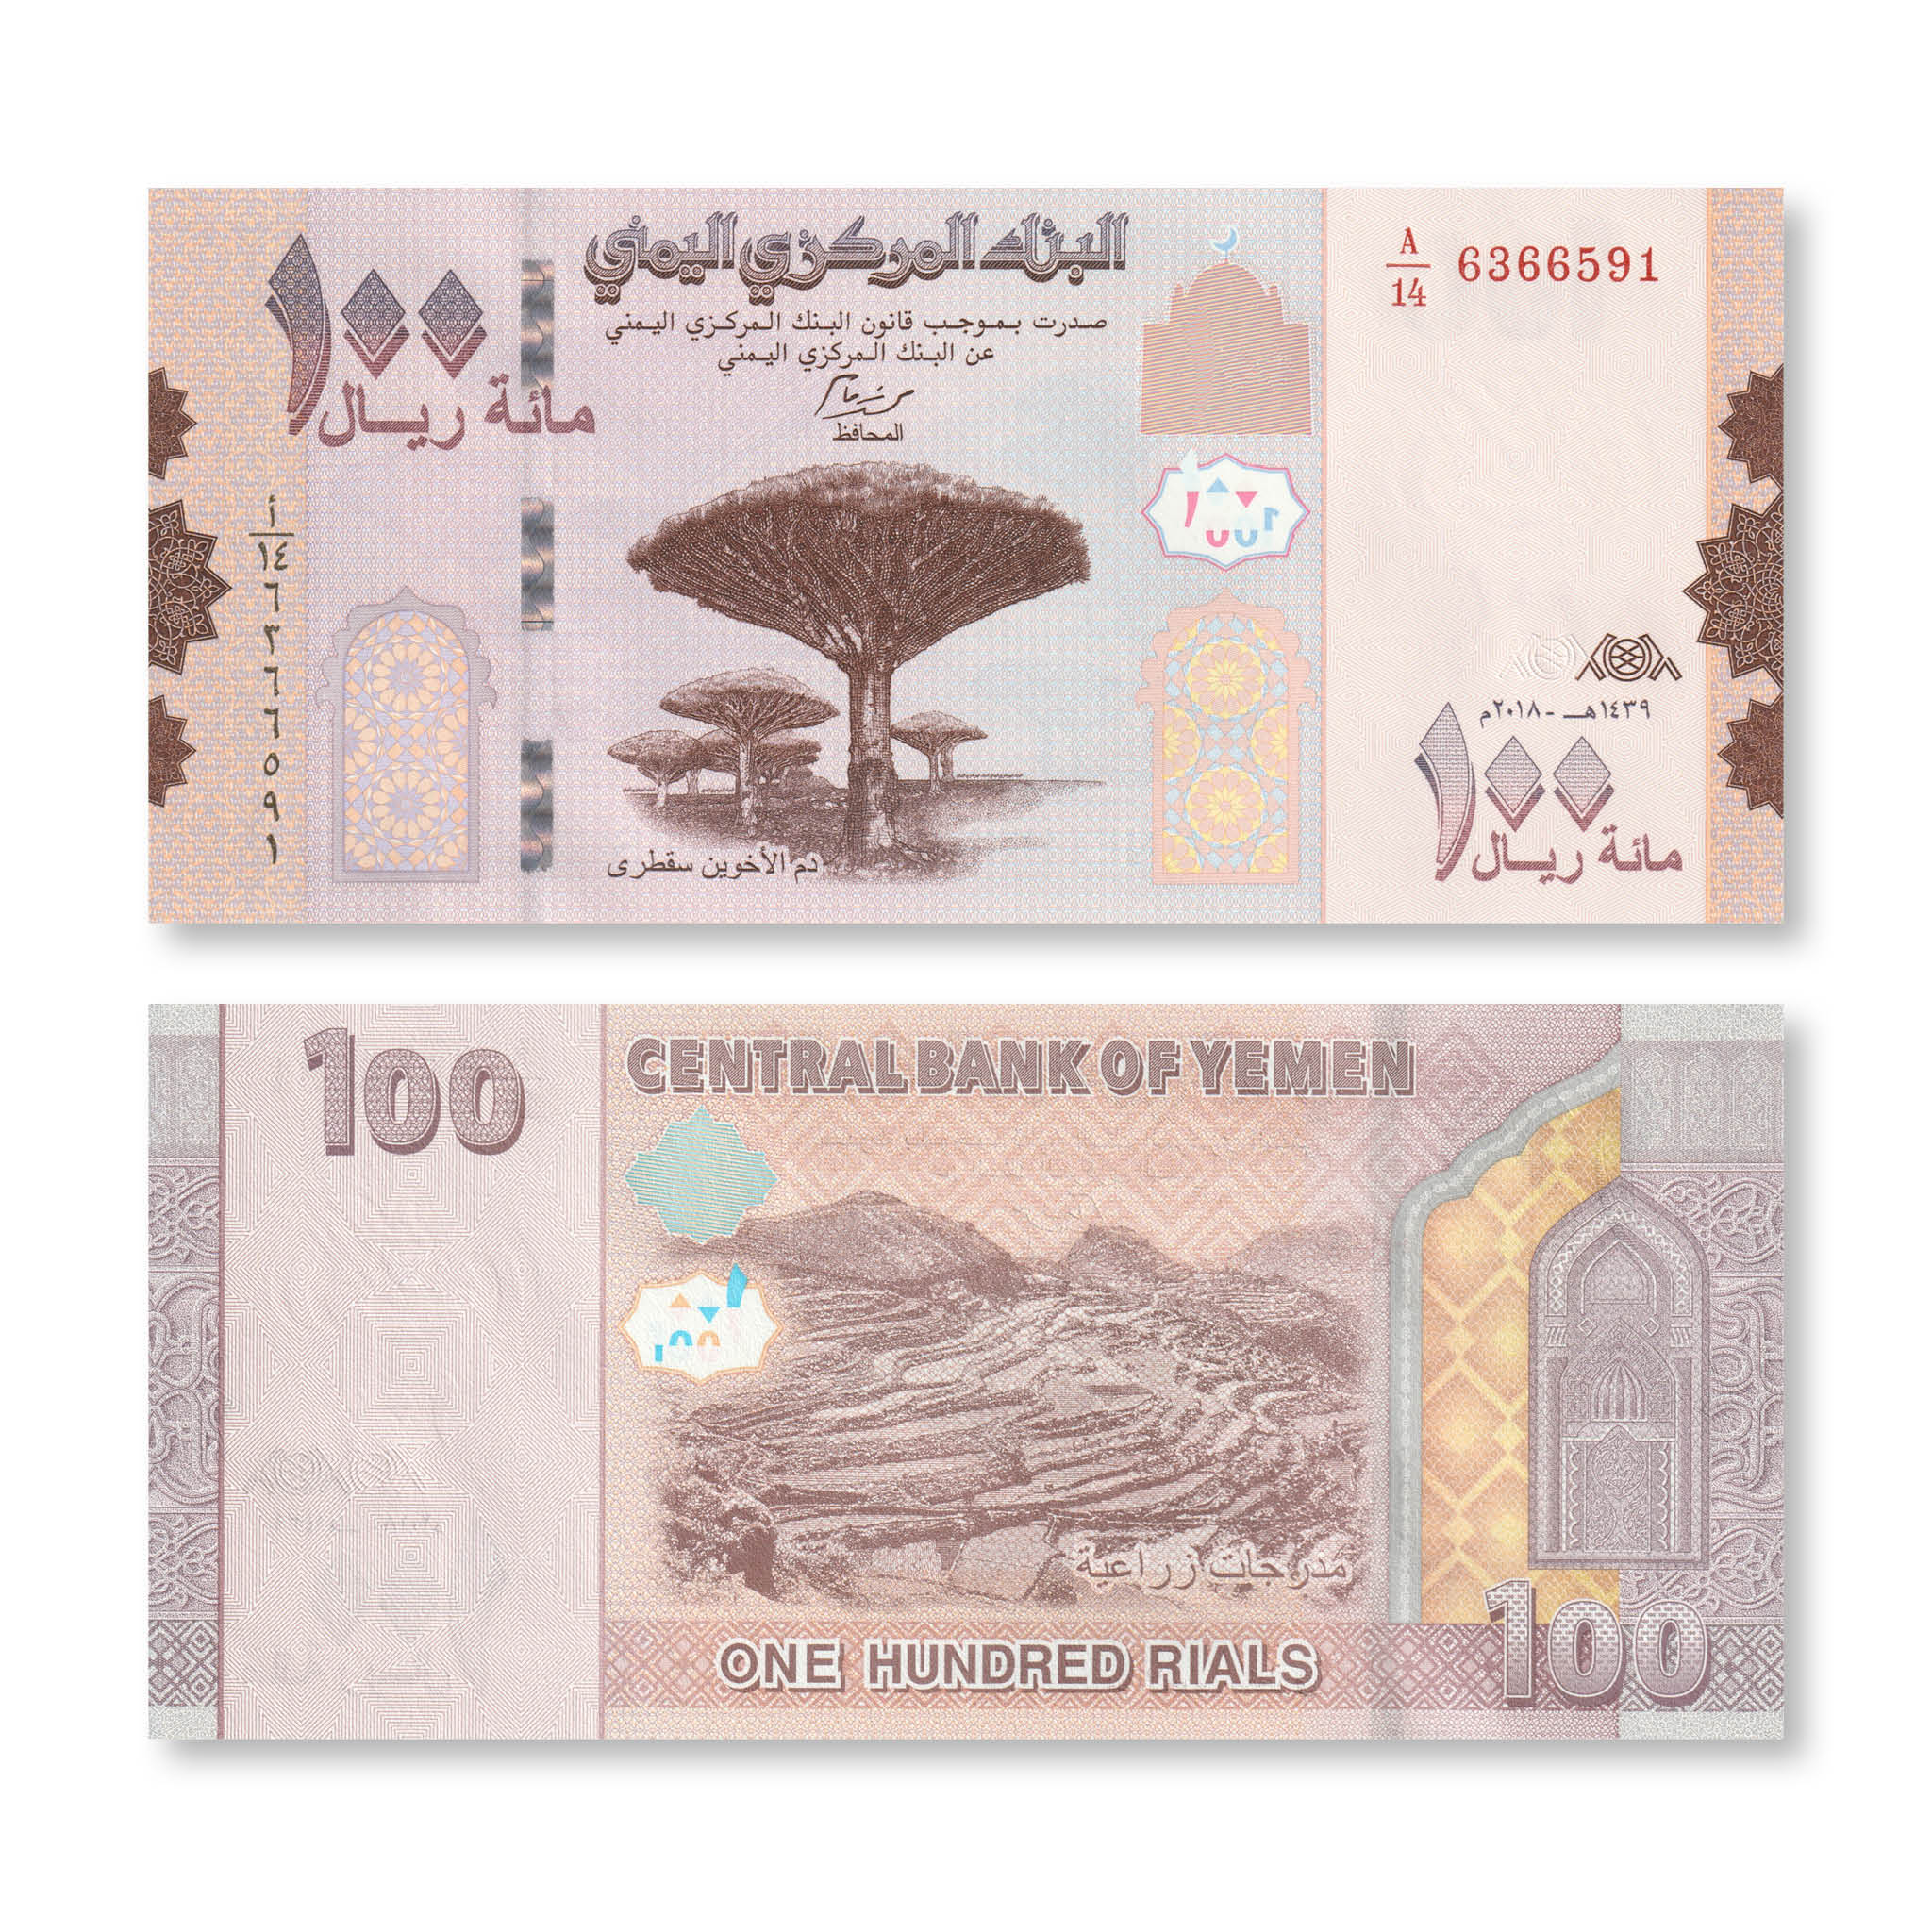 Yemen 100 Rials, 2018, B131b, UNC - Robert's World Money - World Banknotes